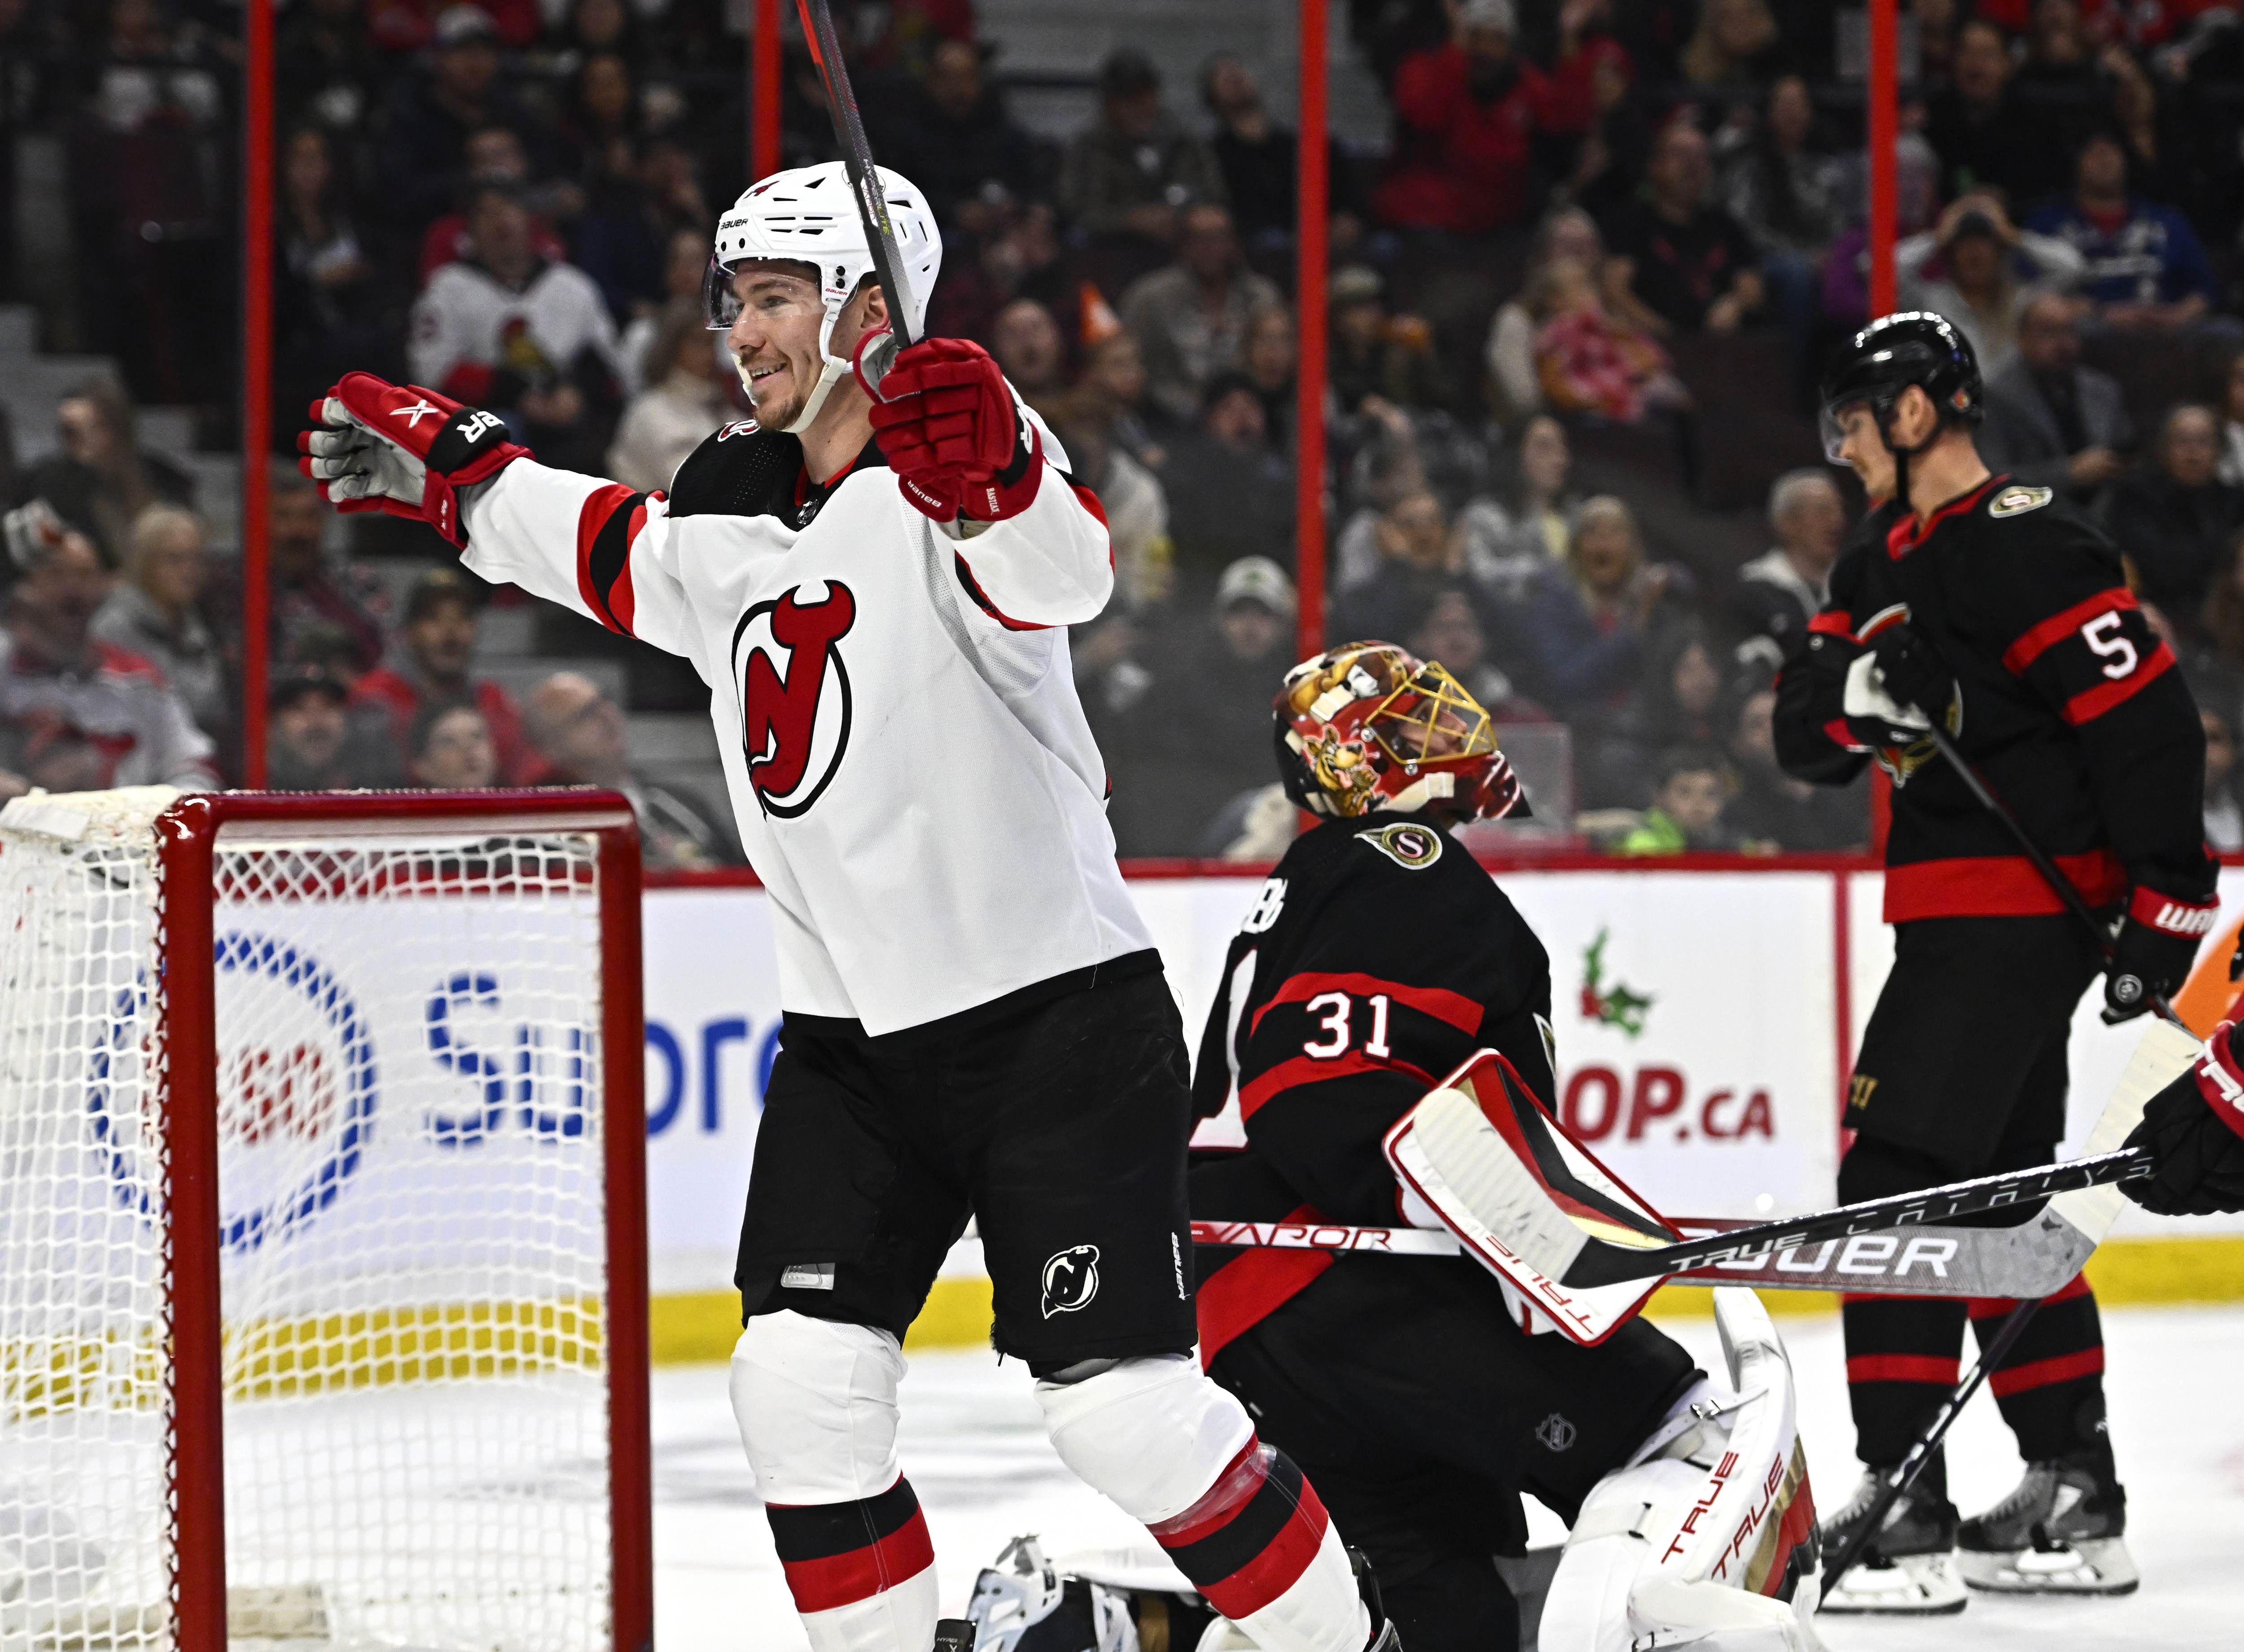 Devils beat Senators, tie 11th-longest winning streak in NHL history